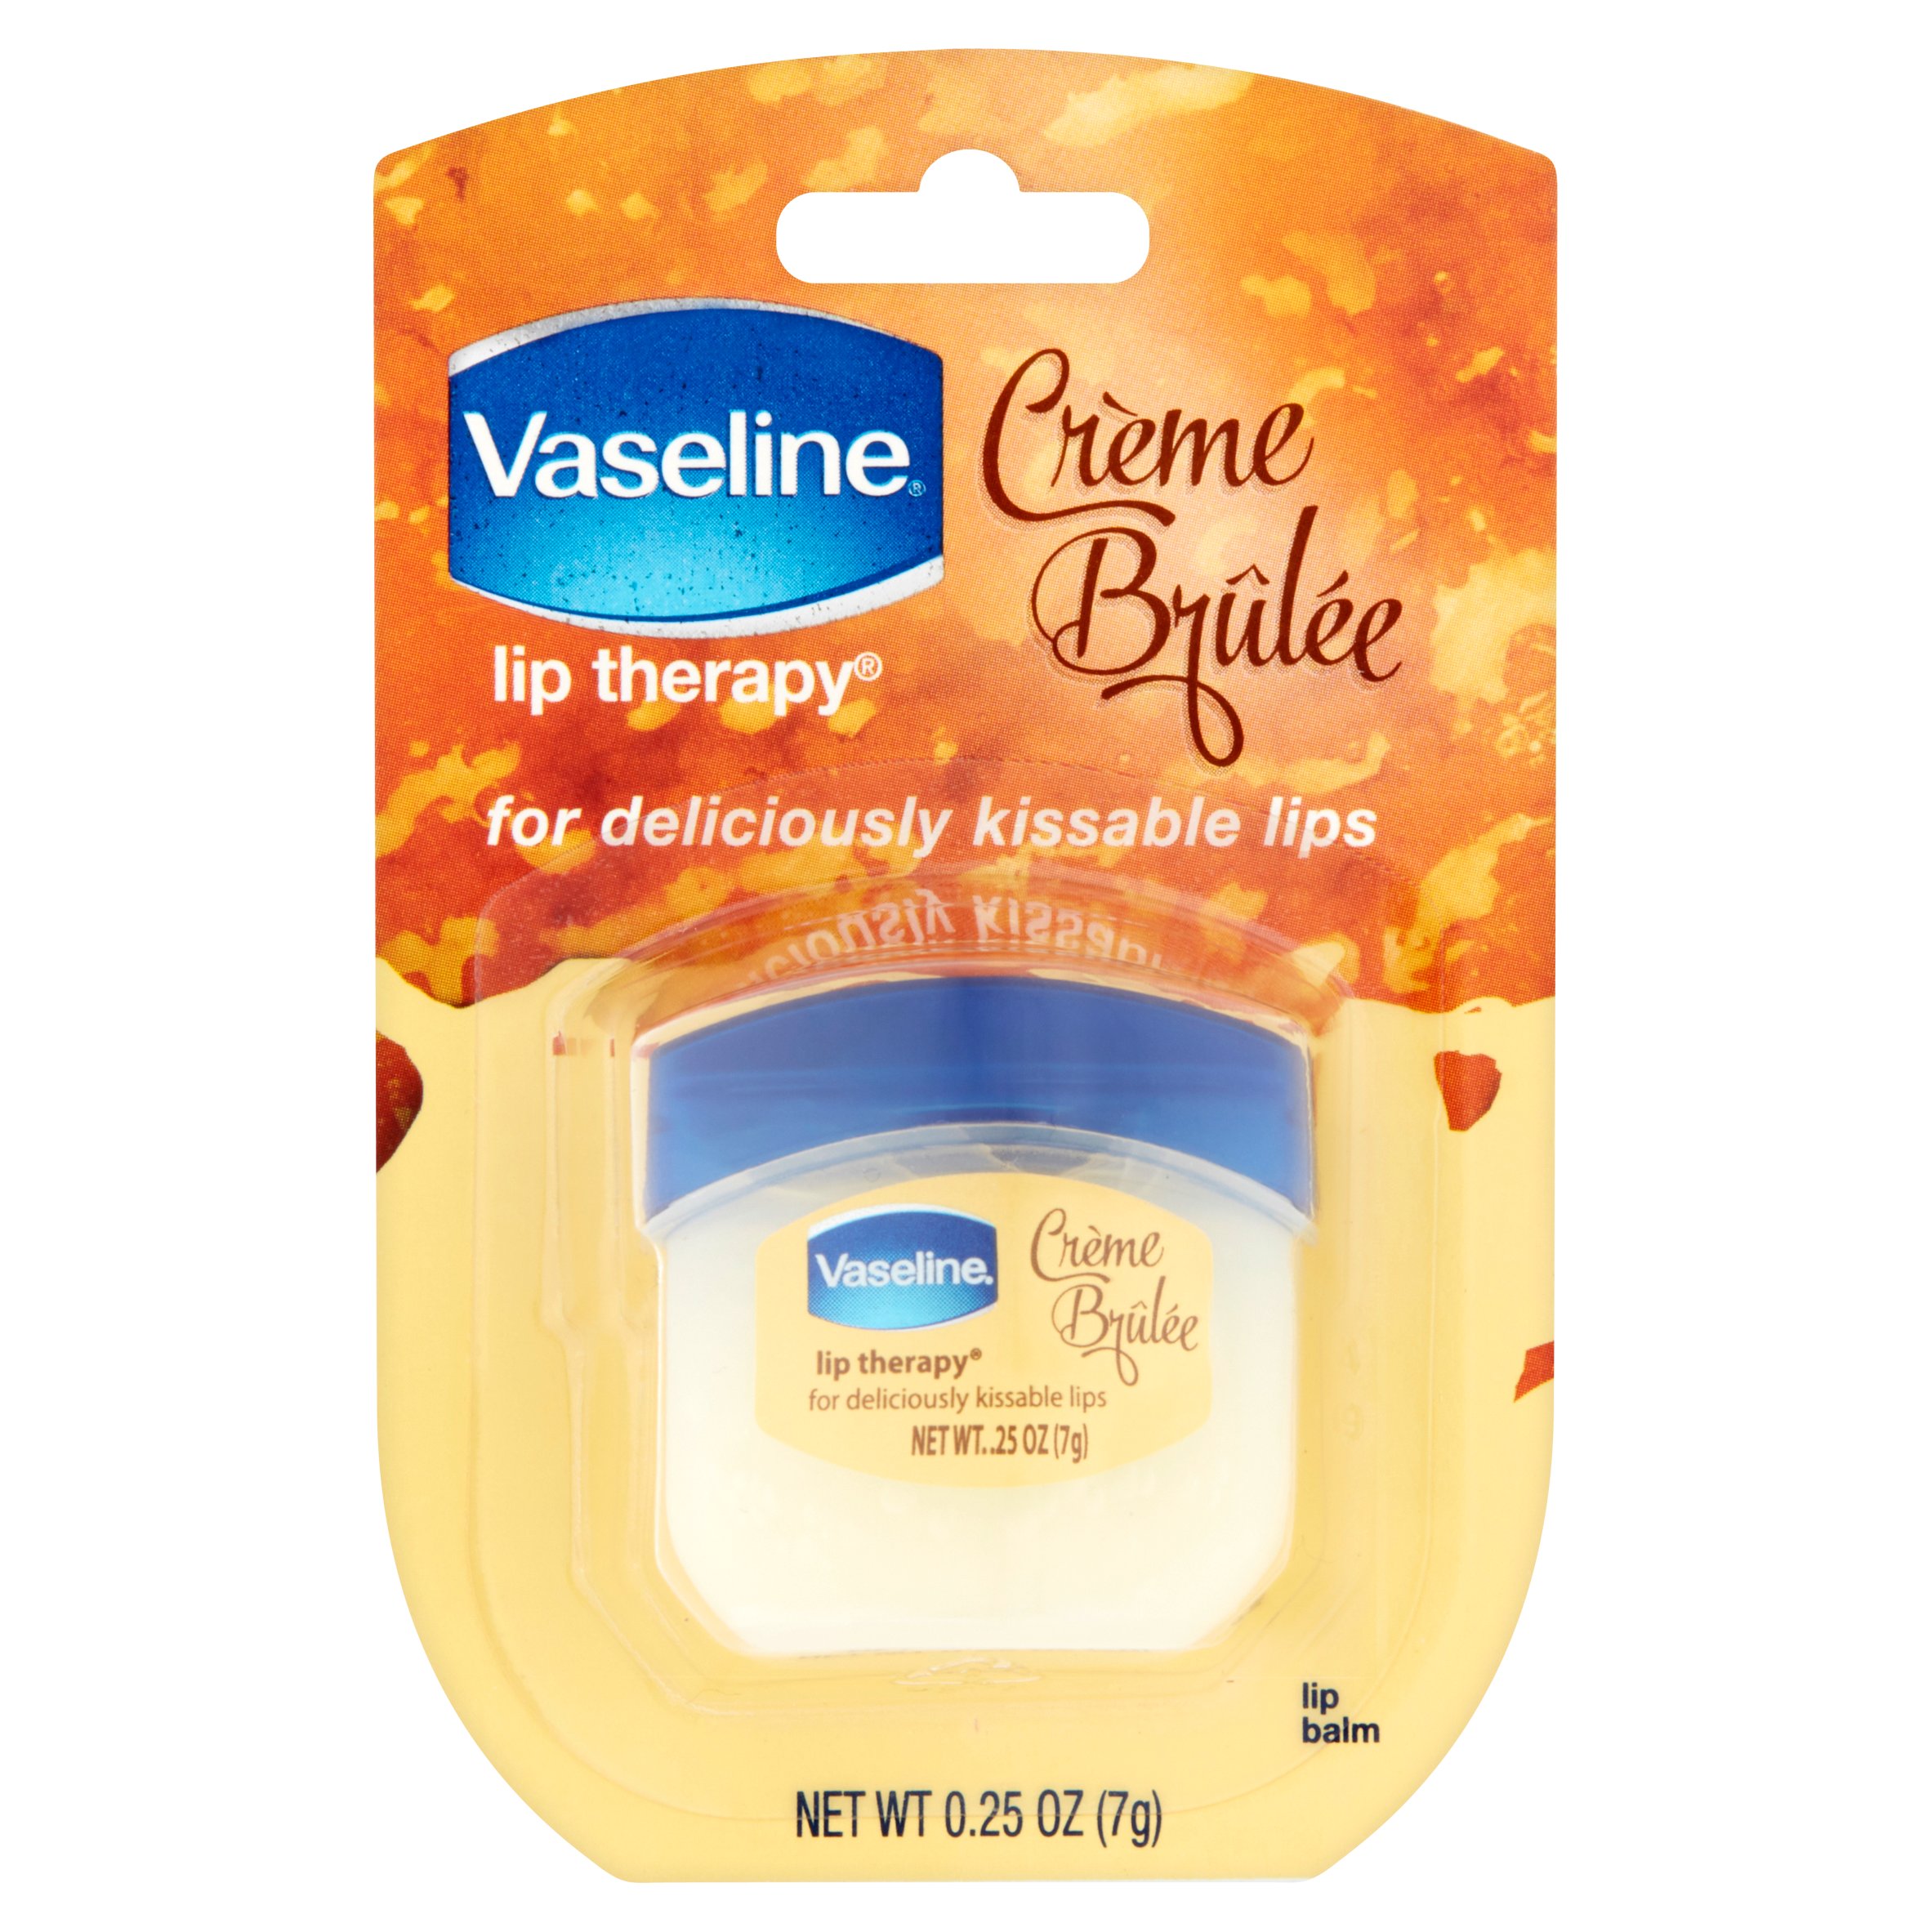 Vaseline Creme Brulee Lip Therapy Lip Balm, 0.25 oz - image 1 of 4